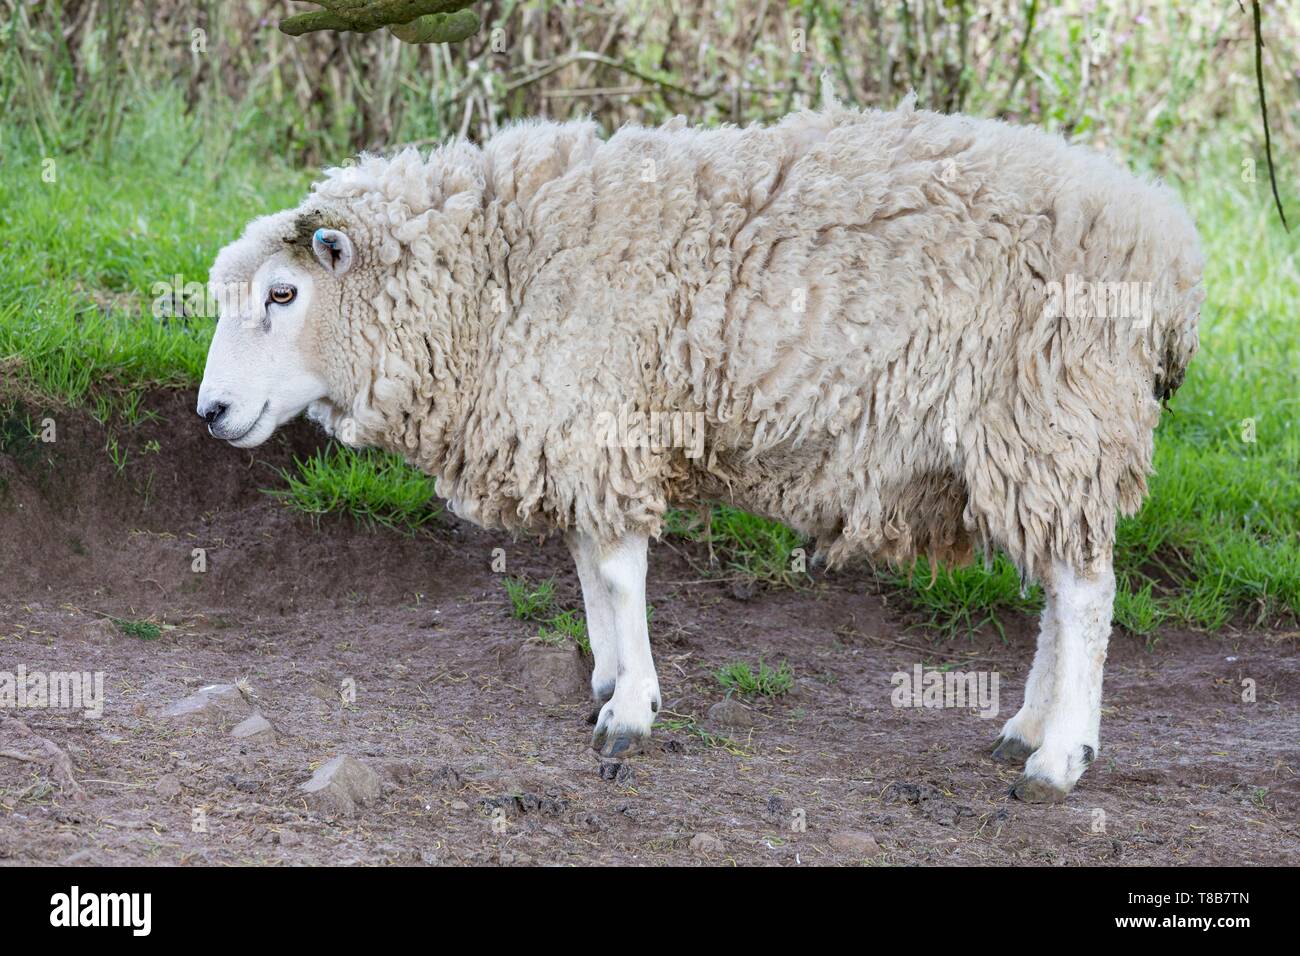 New Zealand, South Island, Otago region, Dunedin, Otago peninsula, sheep Stock Photo